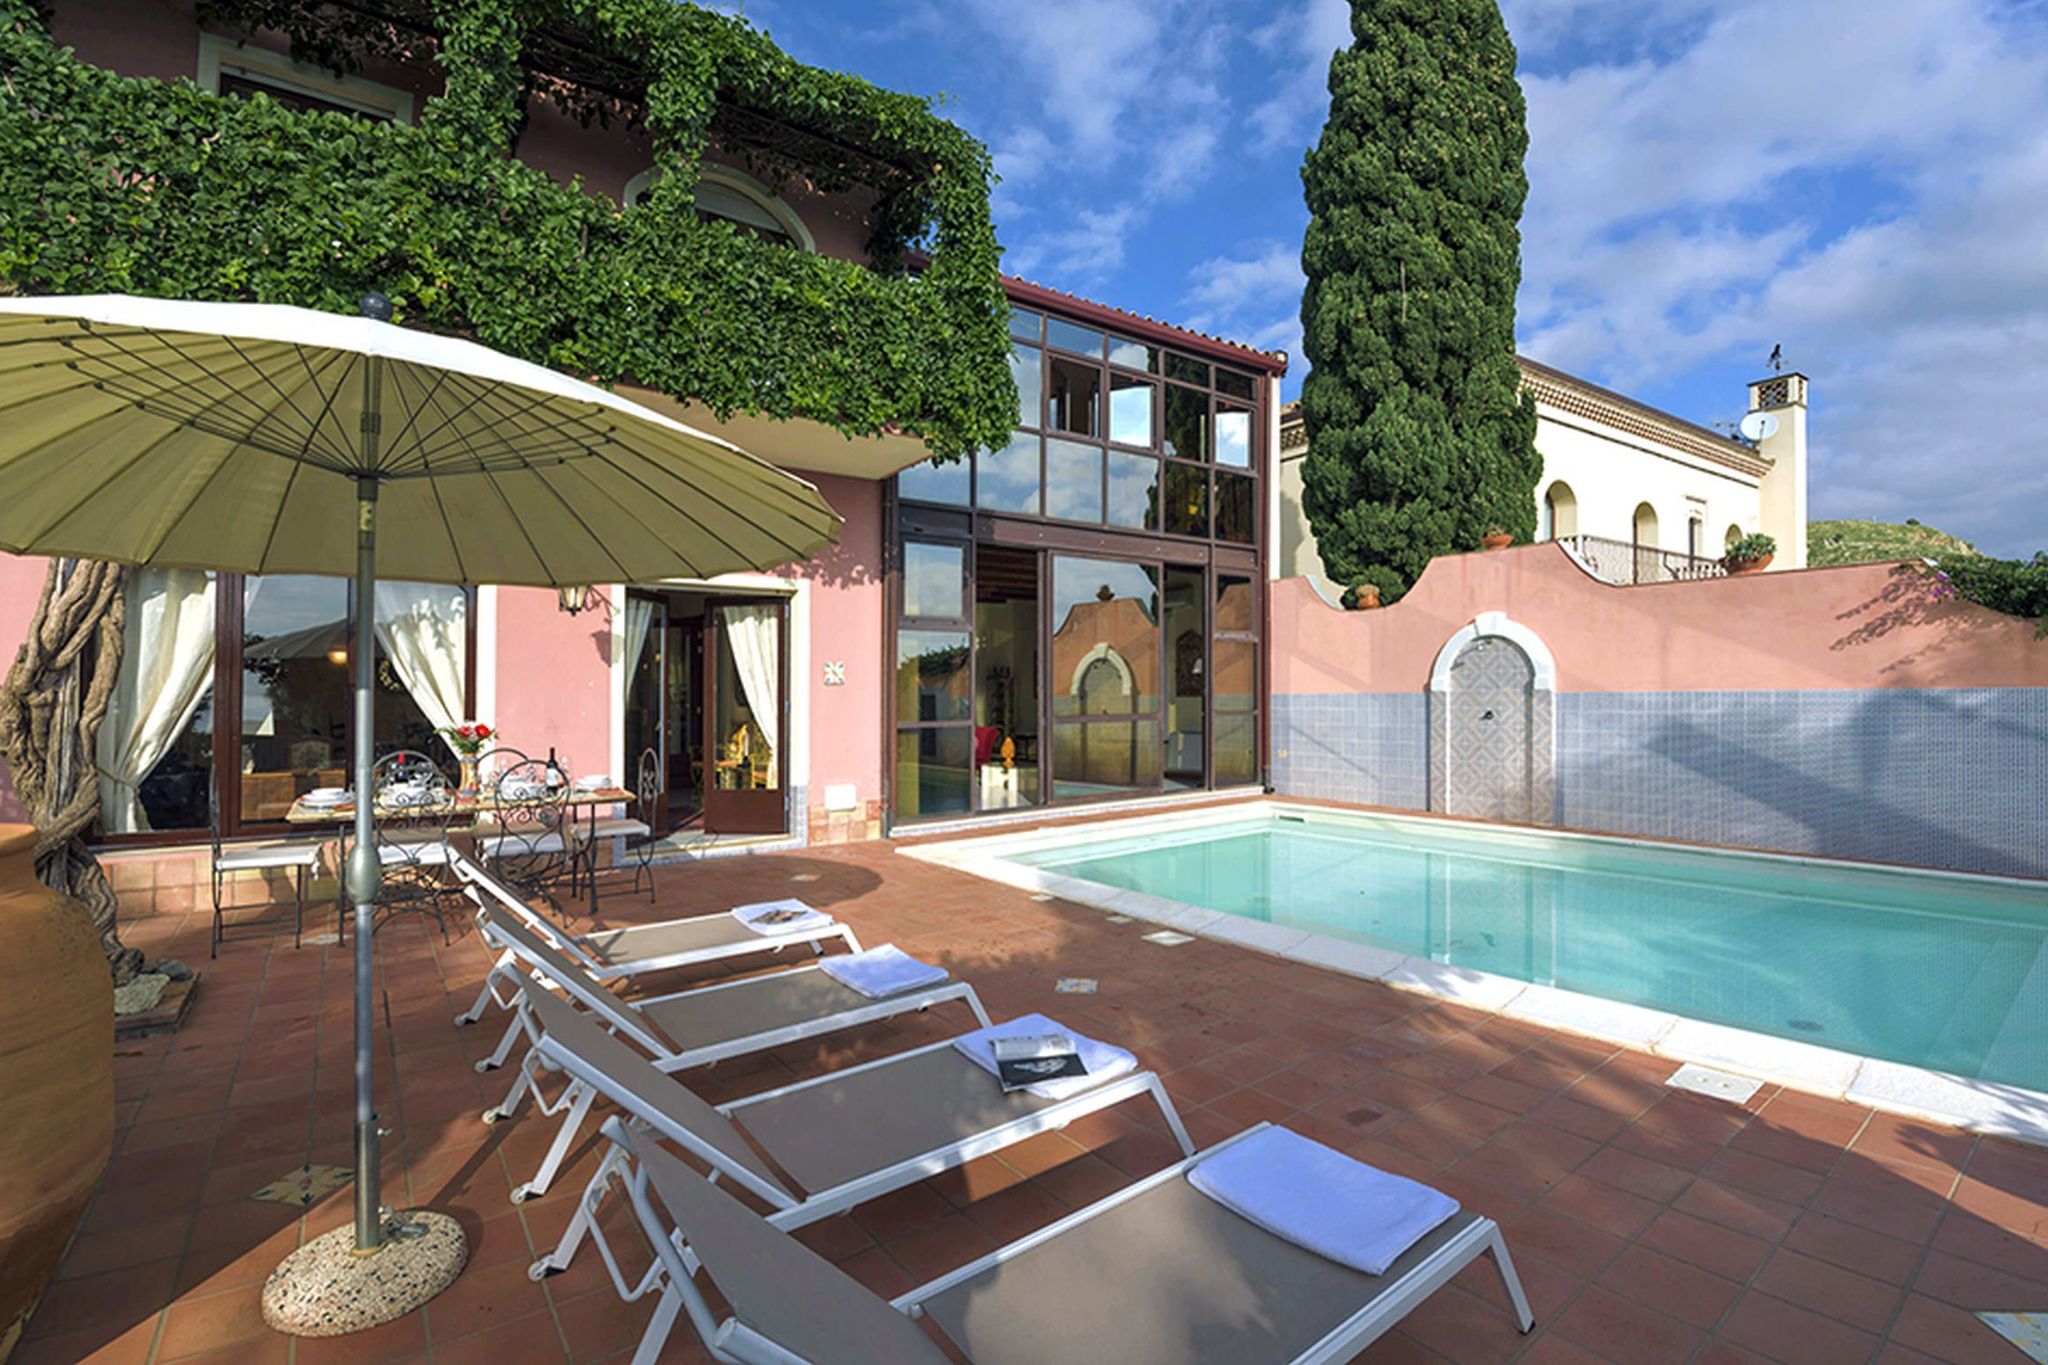 Sea-view villa in Taormina with private pool